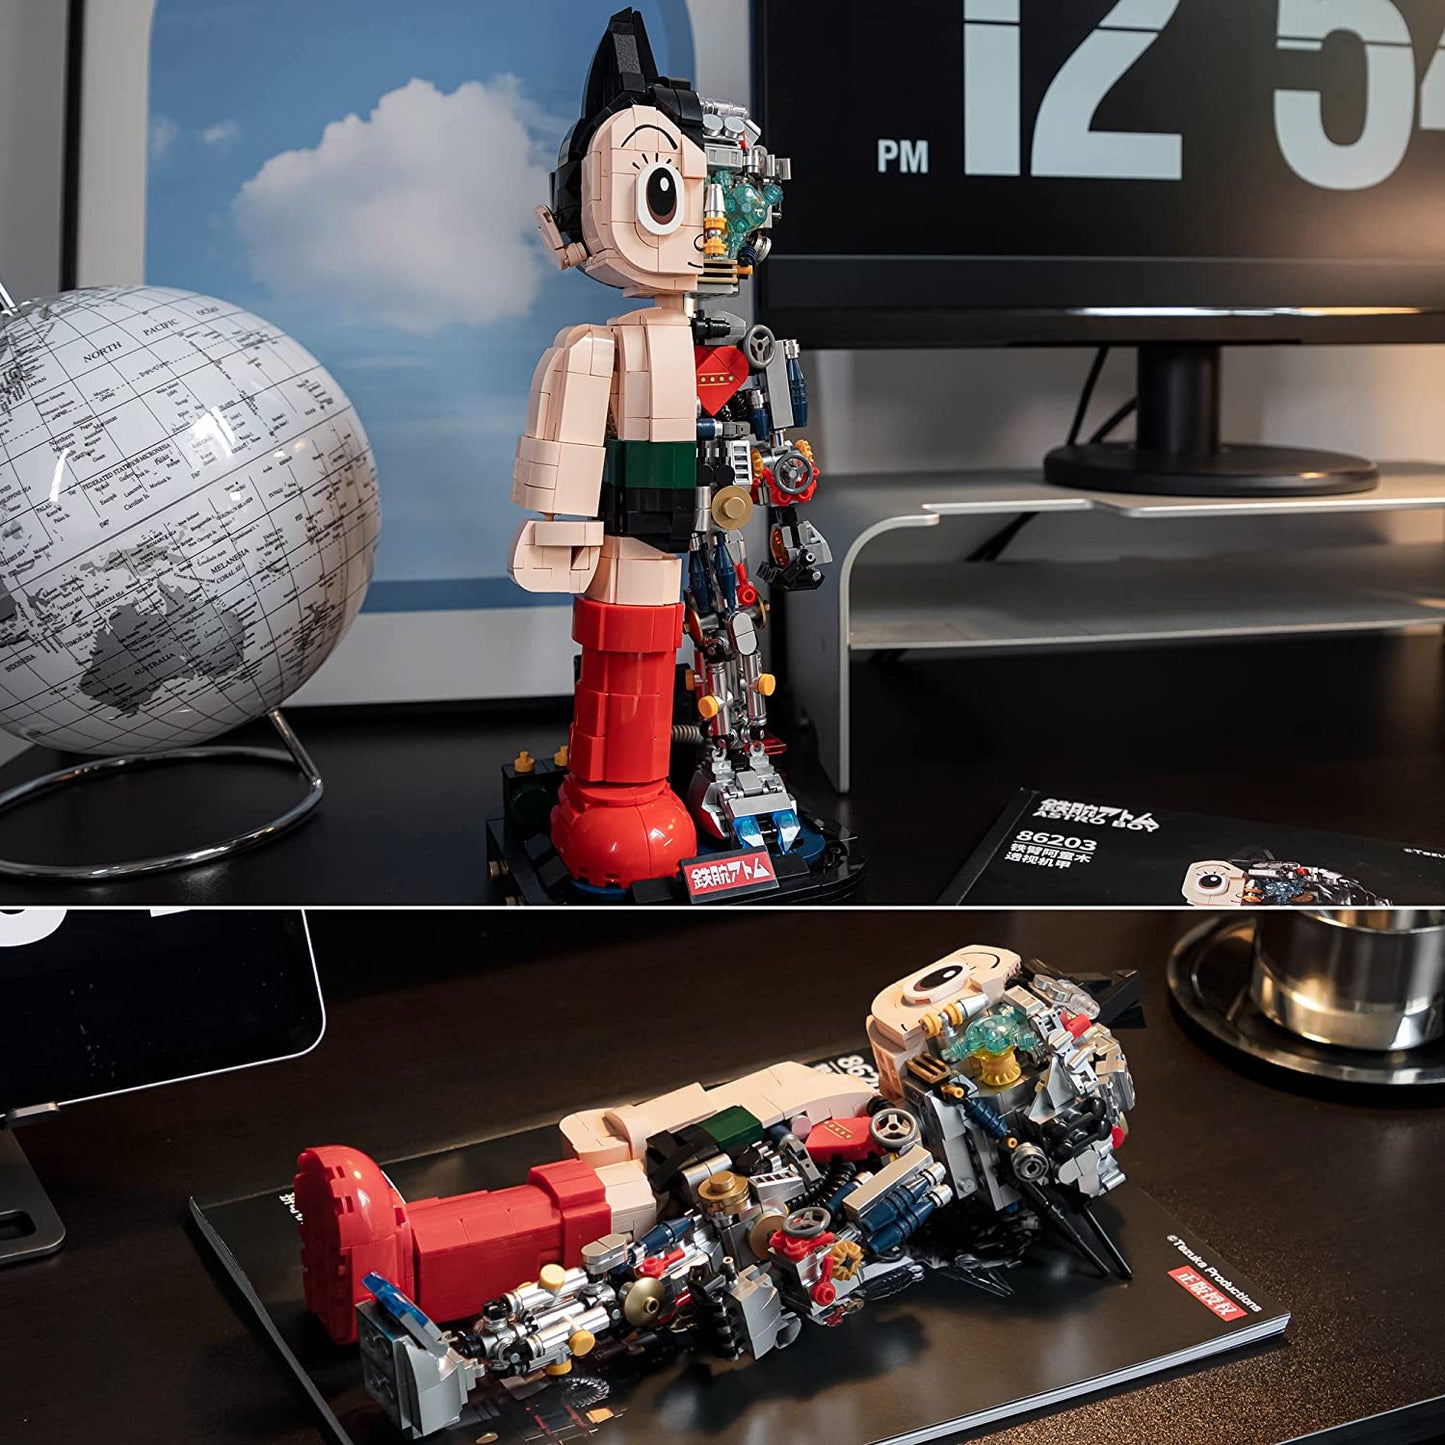 Astro Boy / Robot Brick Figure Display Set